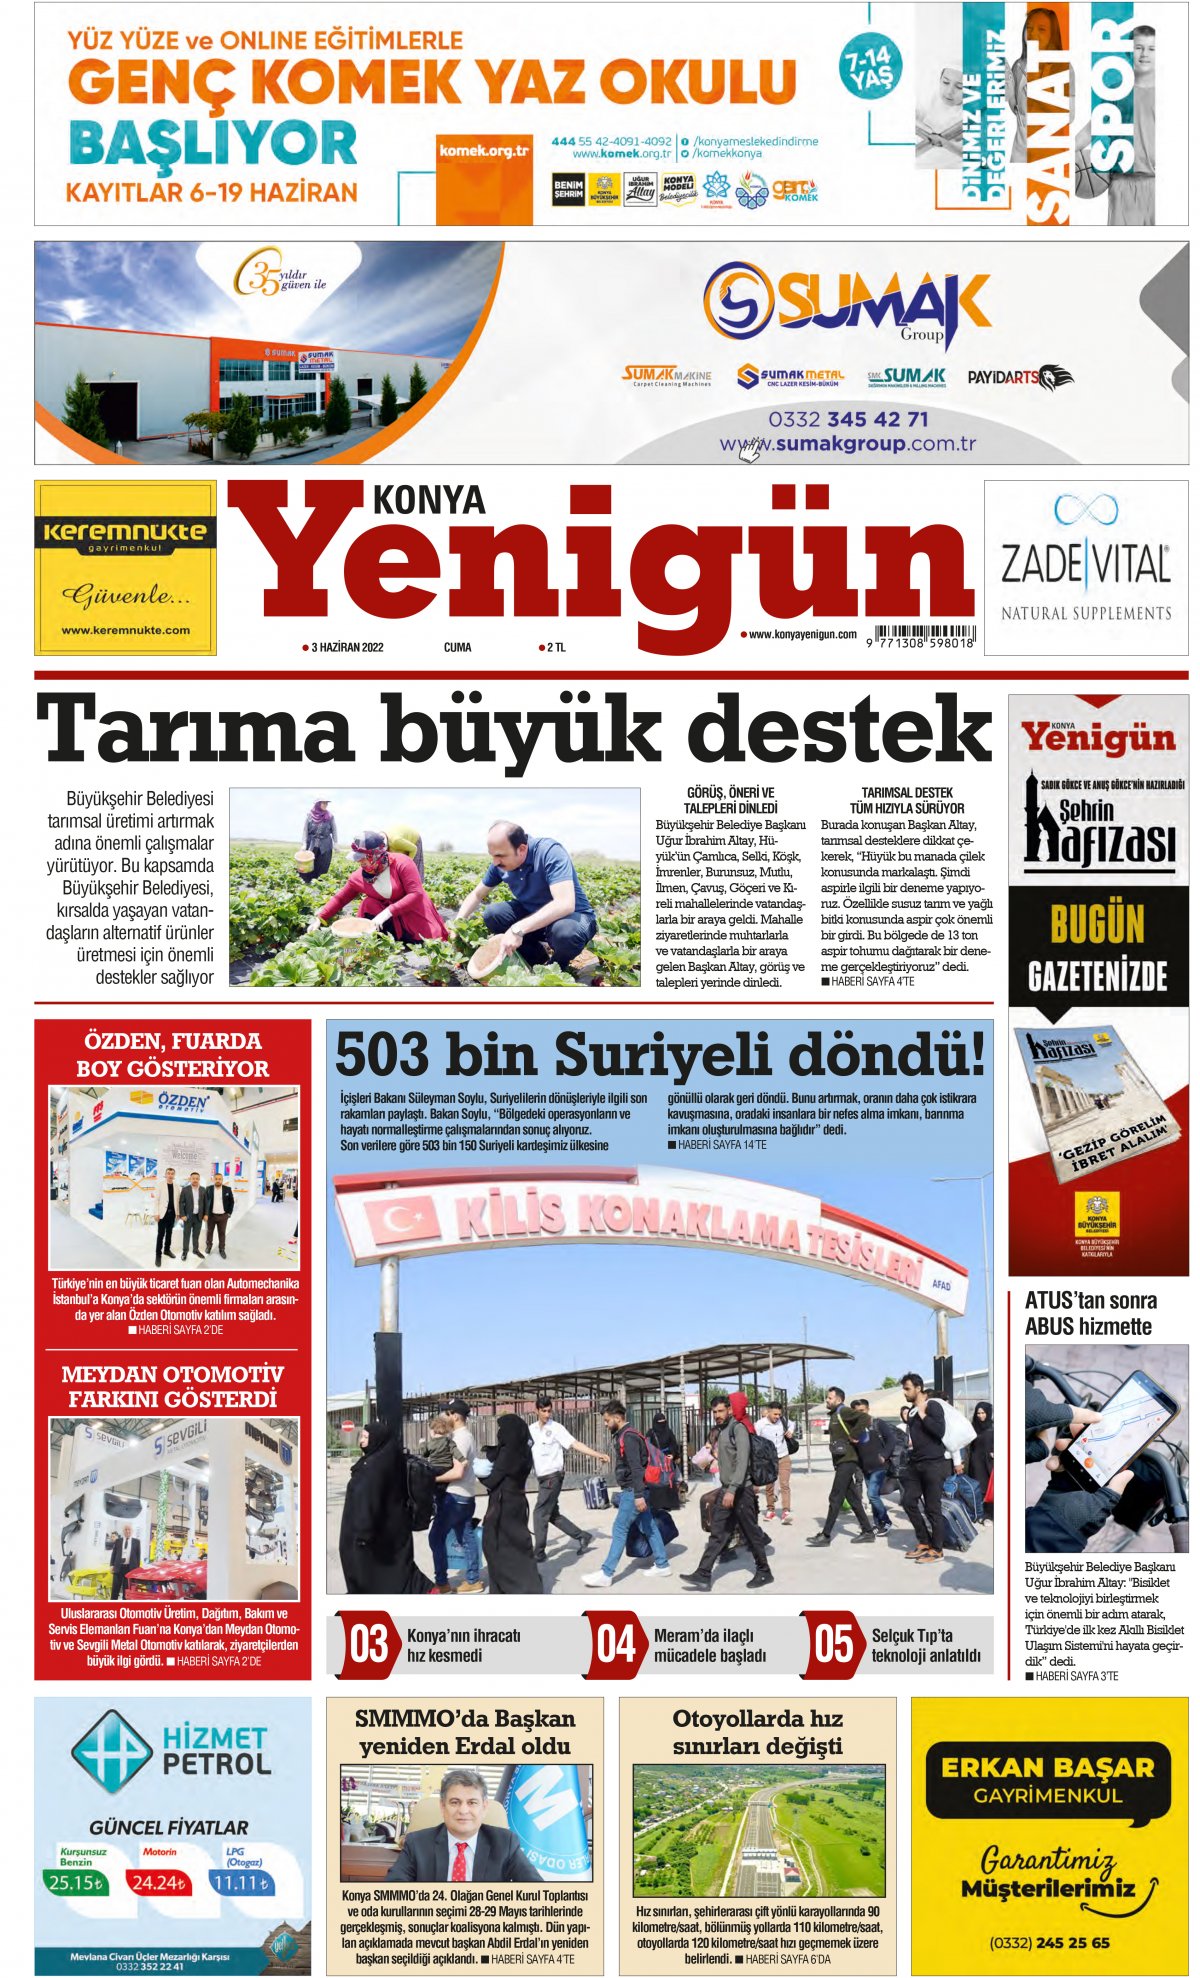 Konya Yenigün Gazetesi - 03.06.2022 Manşeti